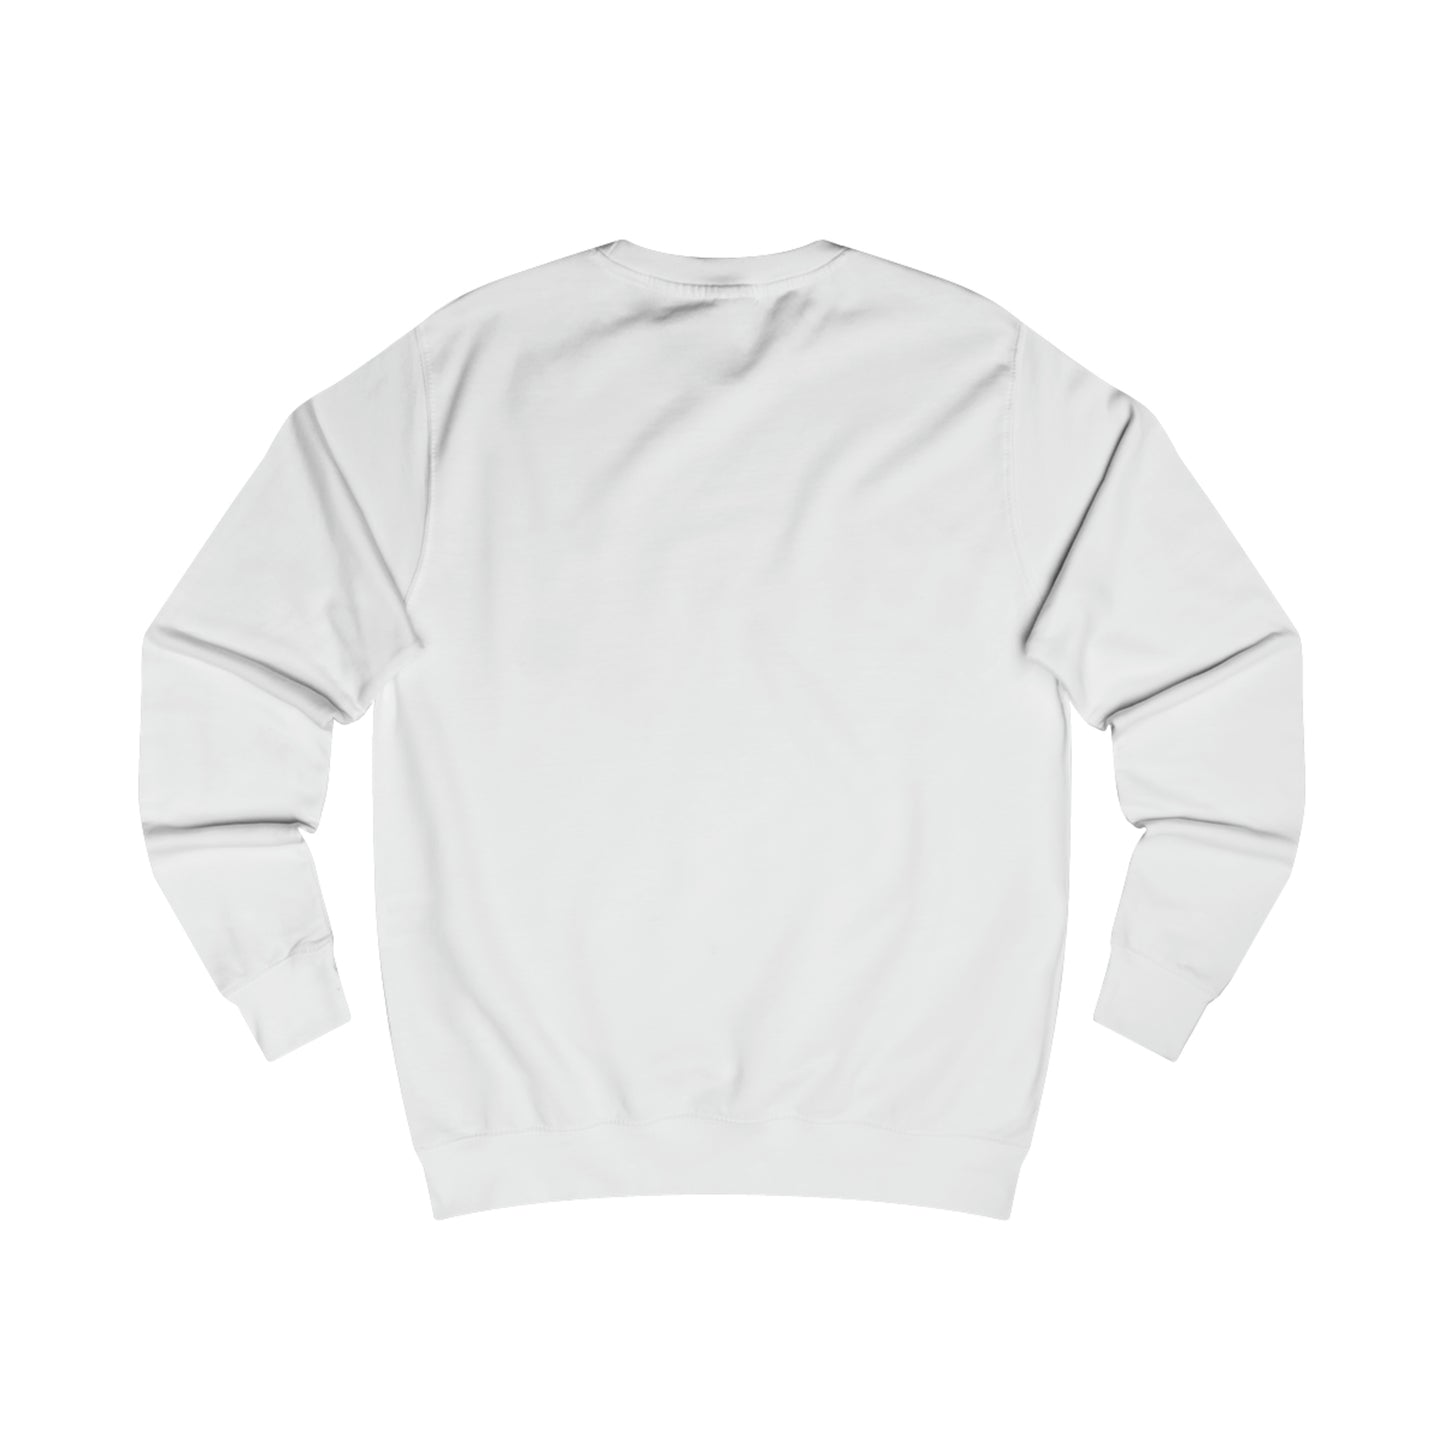 Sassy Black Yarns - Unisex Sweatshirt